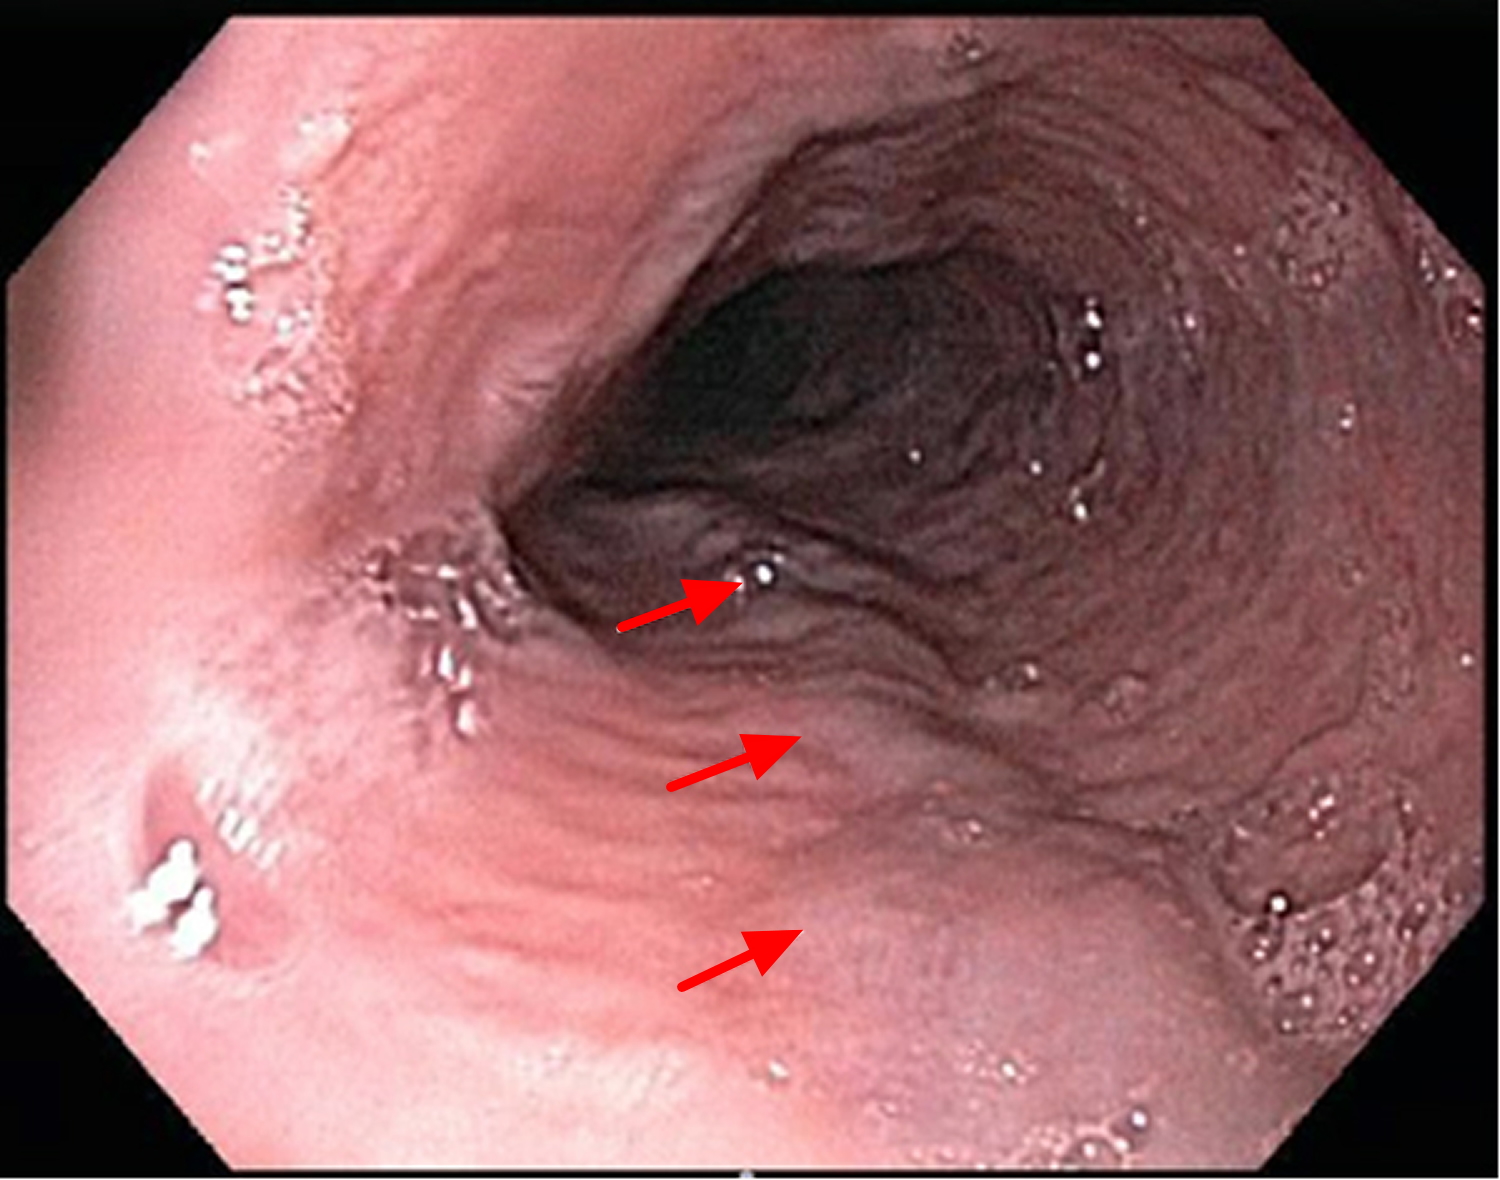 esophageal varices rupture